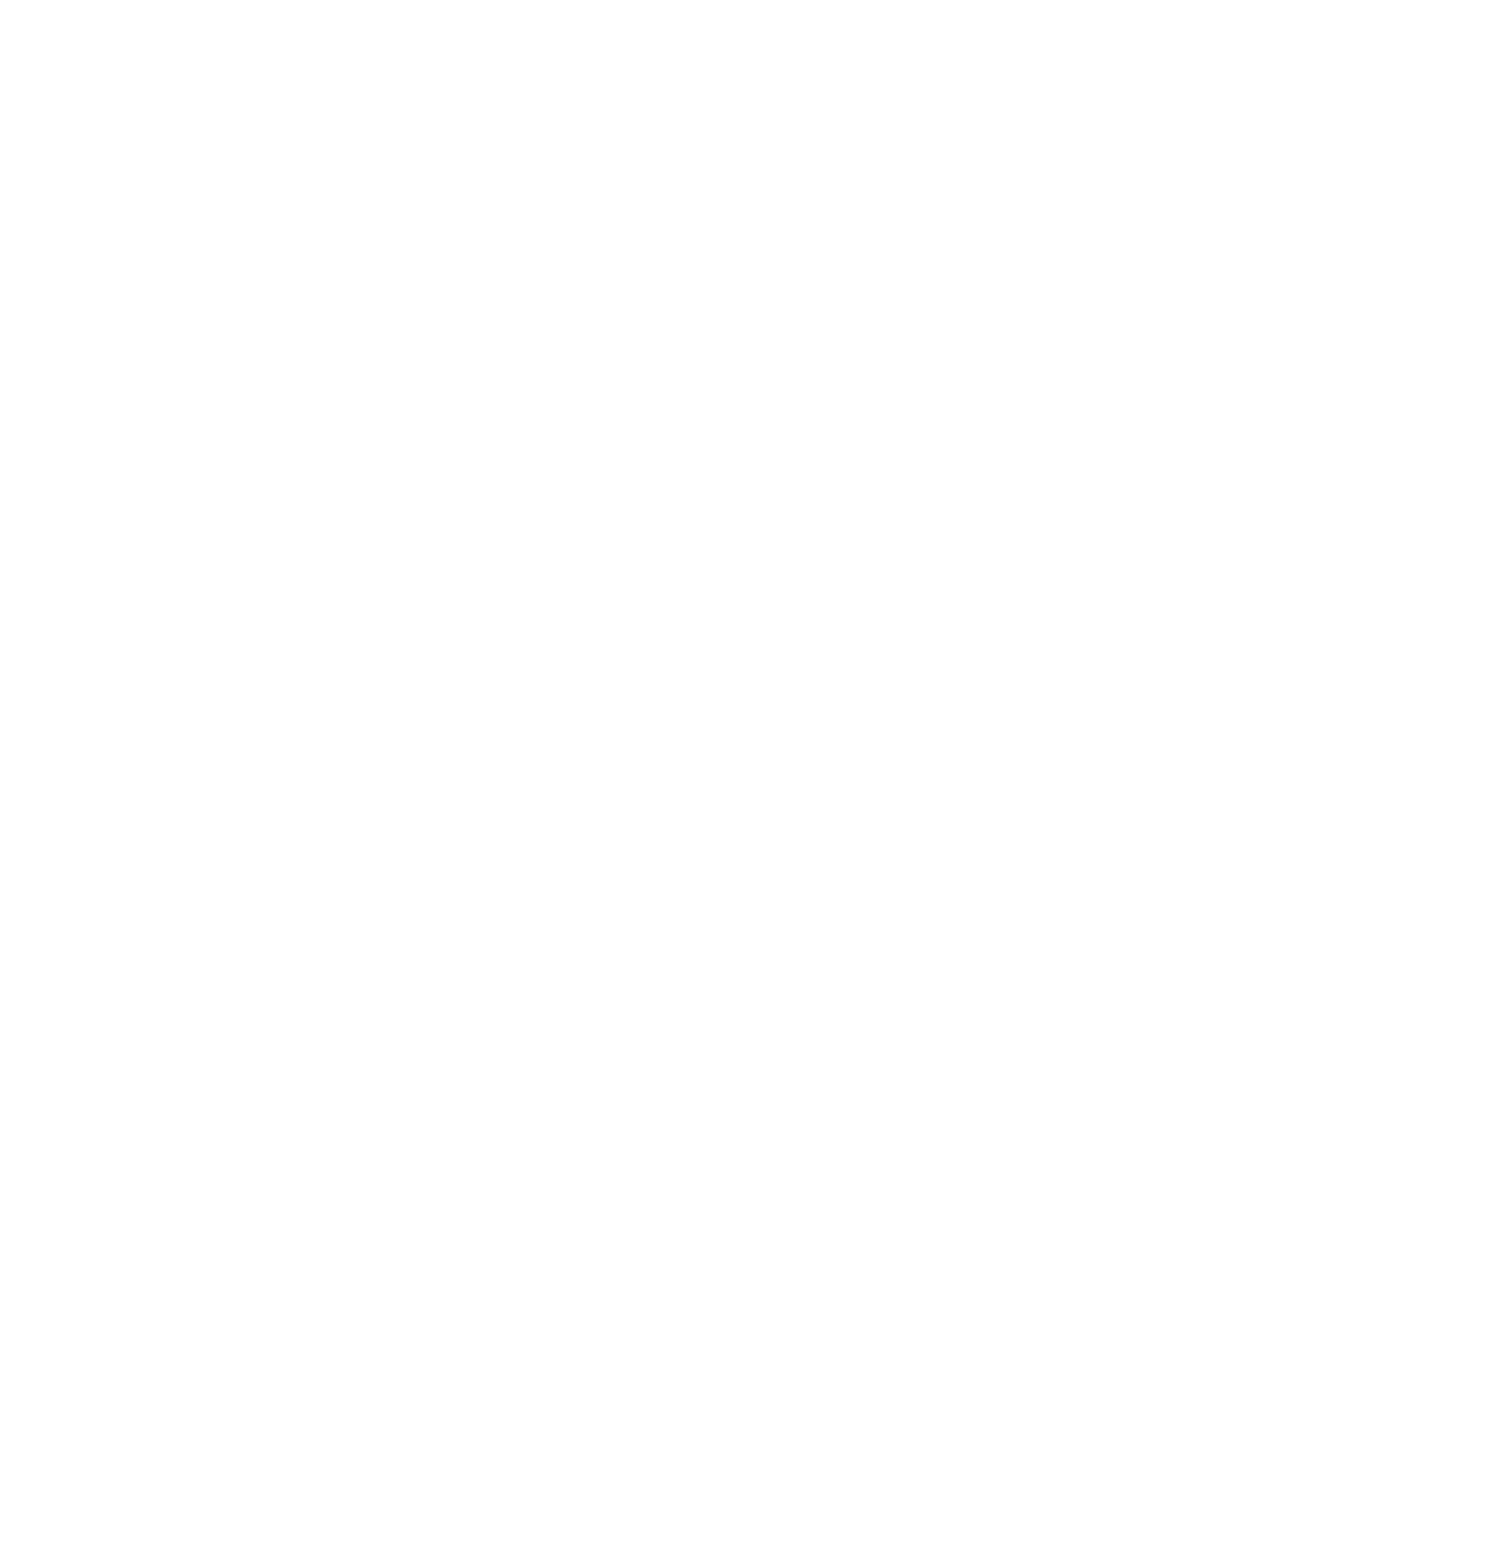 Shimano logo pour fonds sombres (PNG transparent)